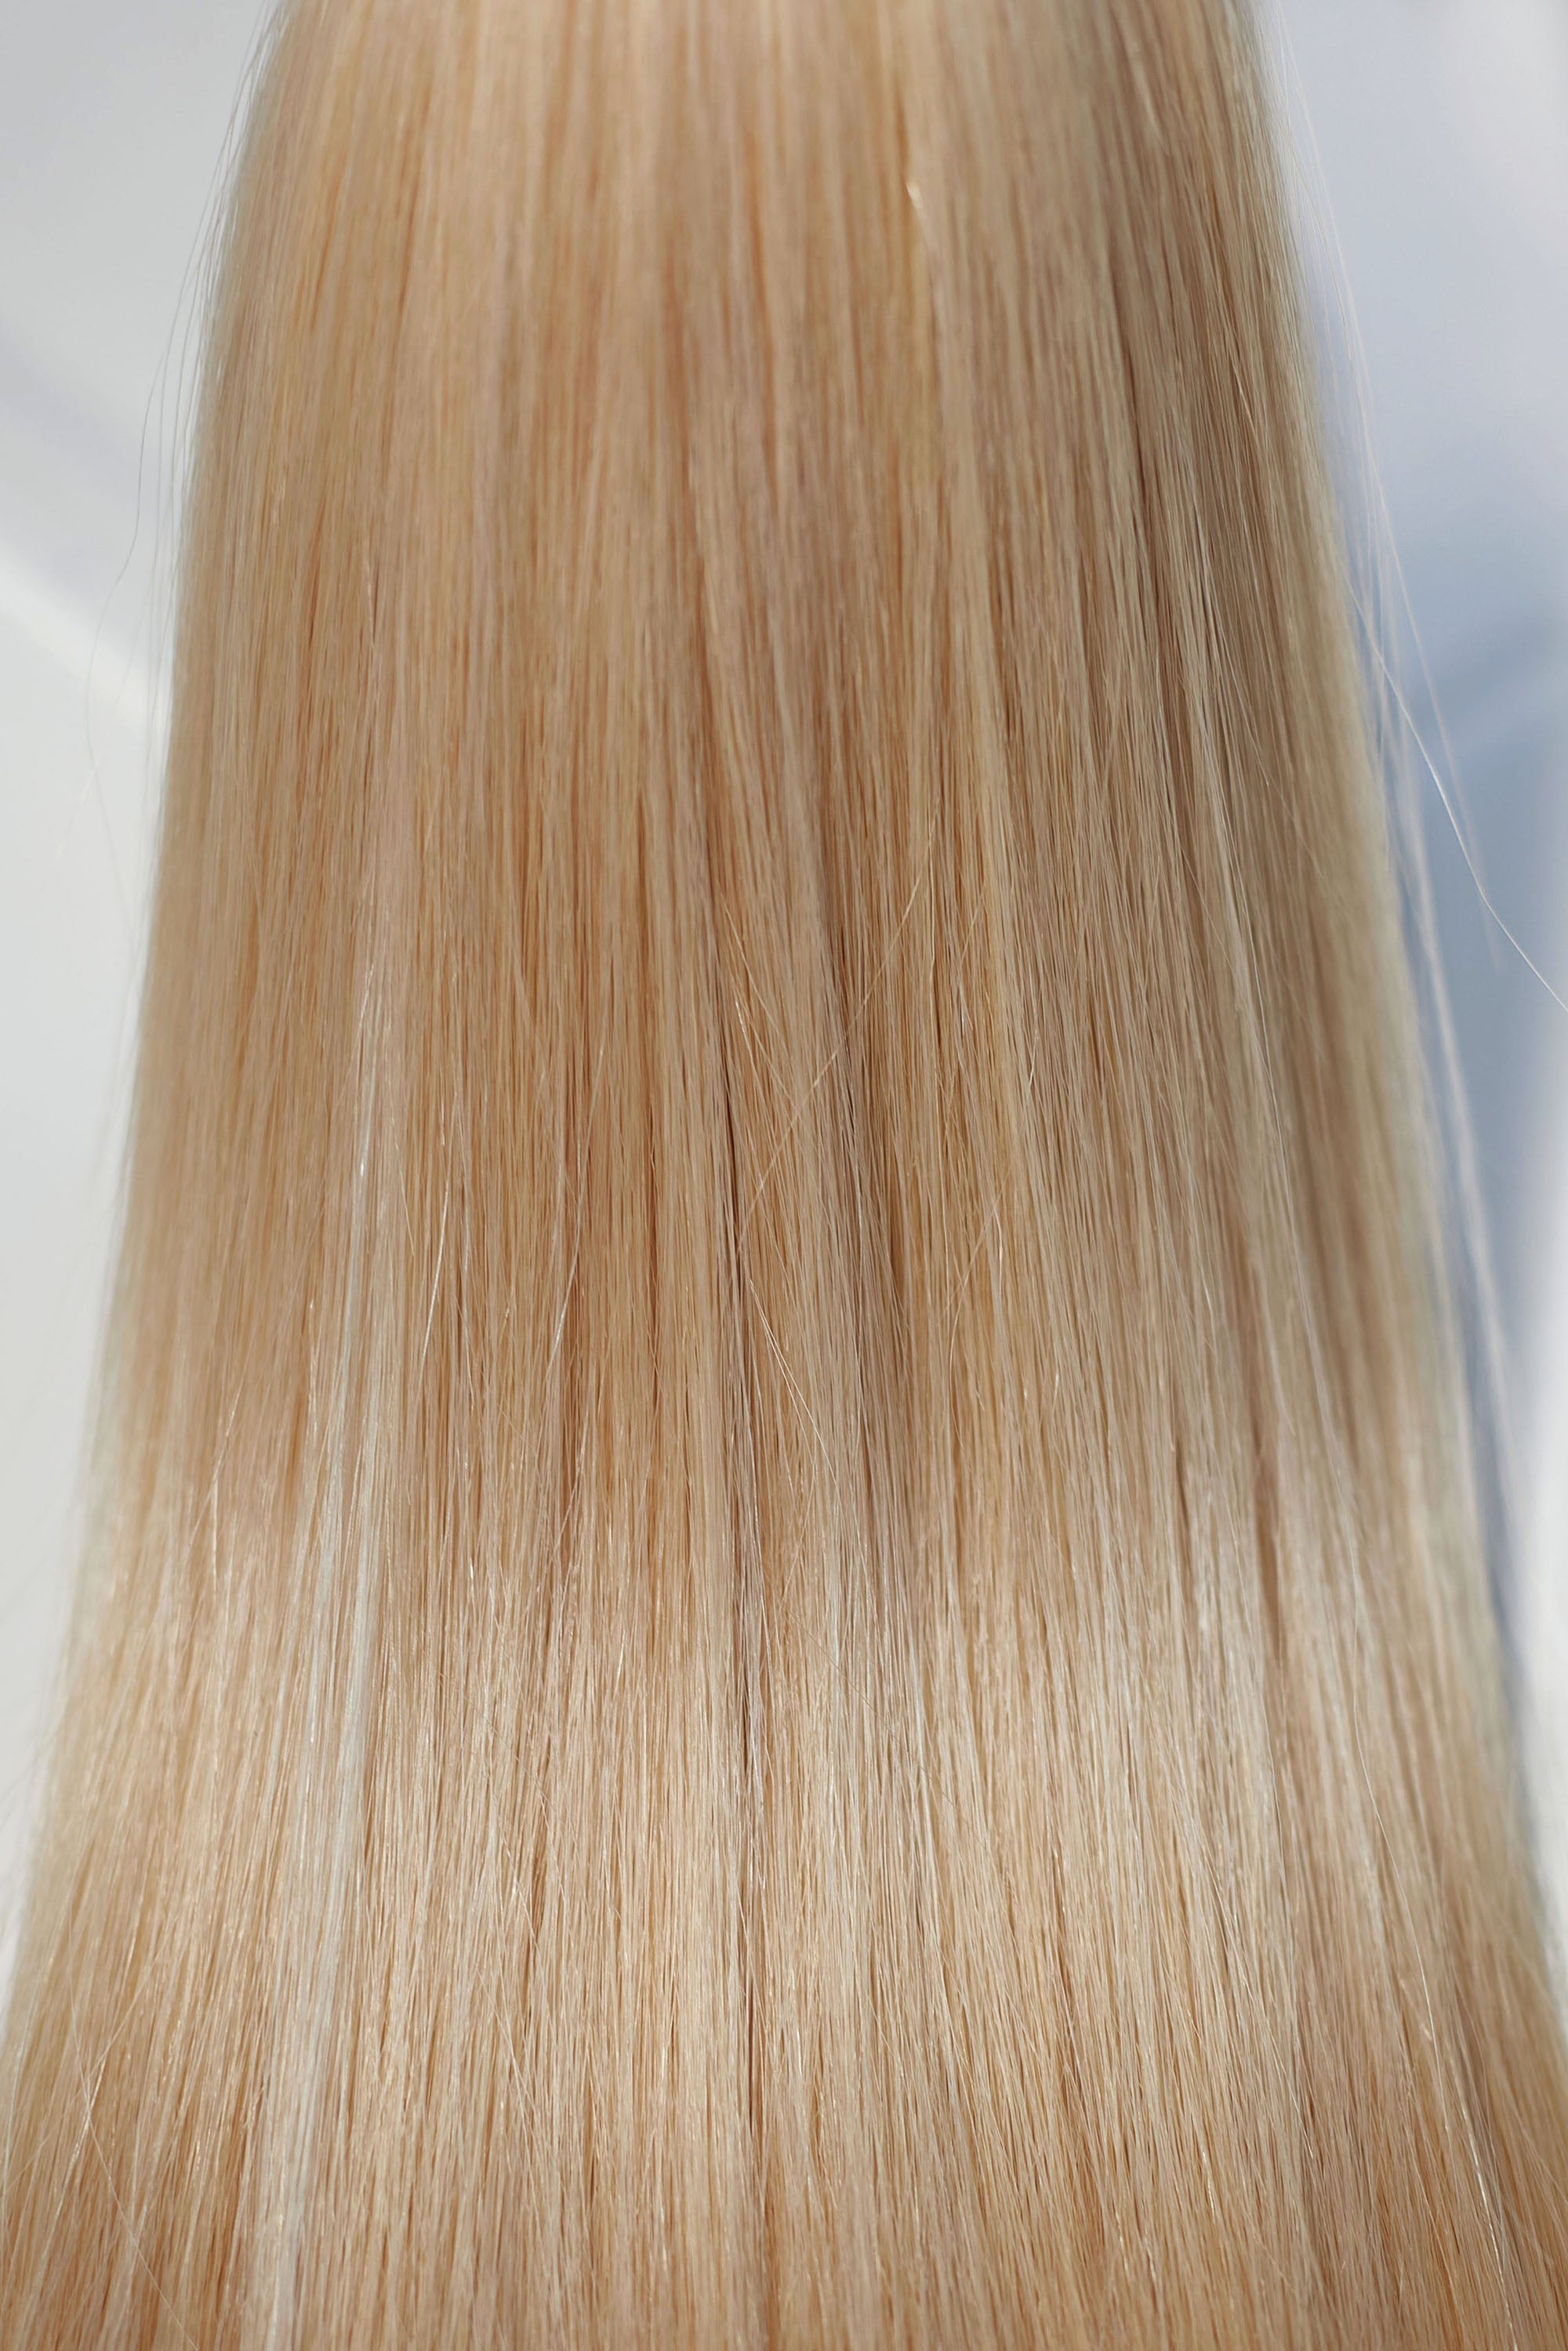 Behair professional Bulk hair "Premium" 22" (55cm) Natural Straight Light Gold Blond #24 - 25g hair extensions